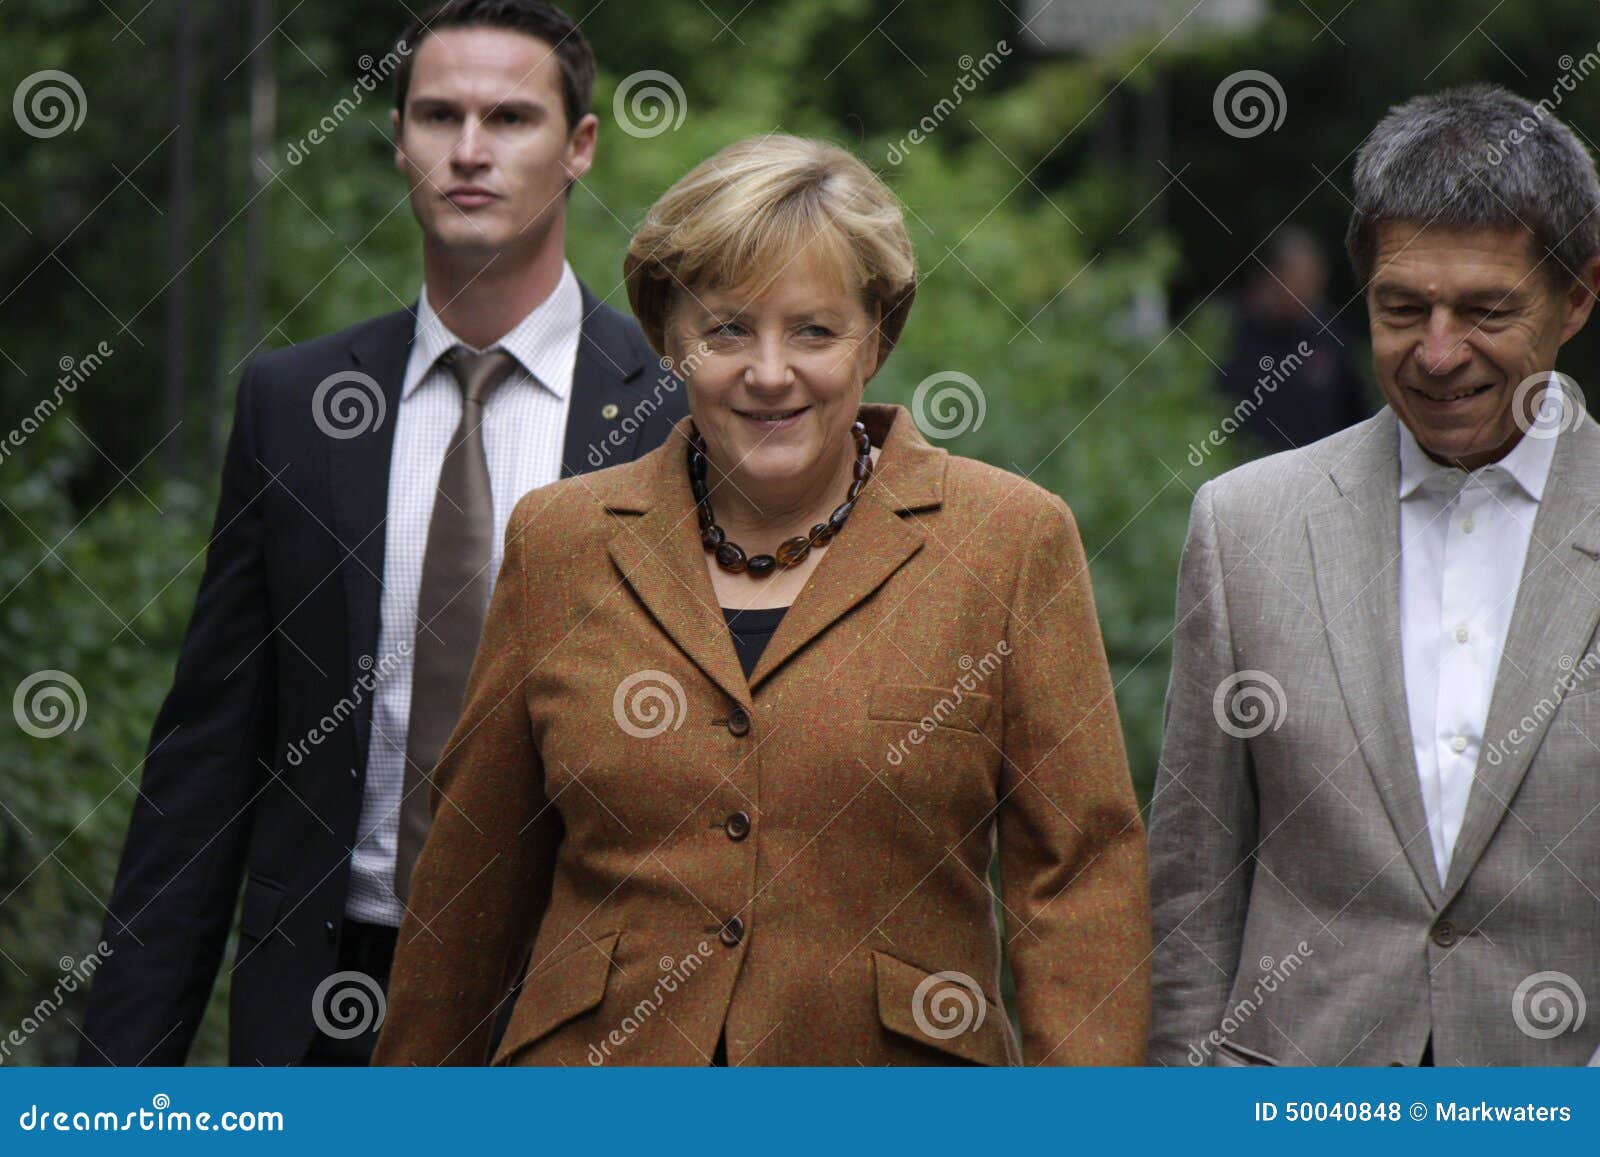 Angela Merkel Husband